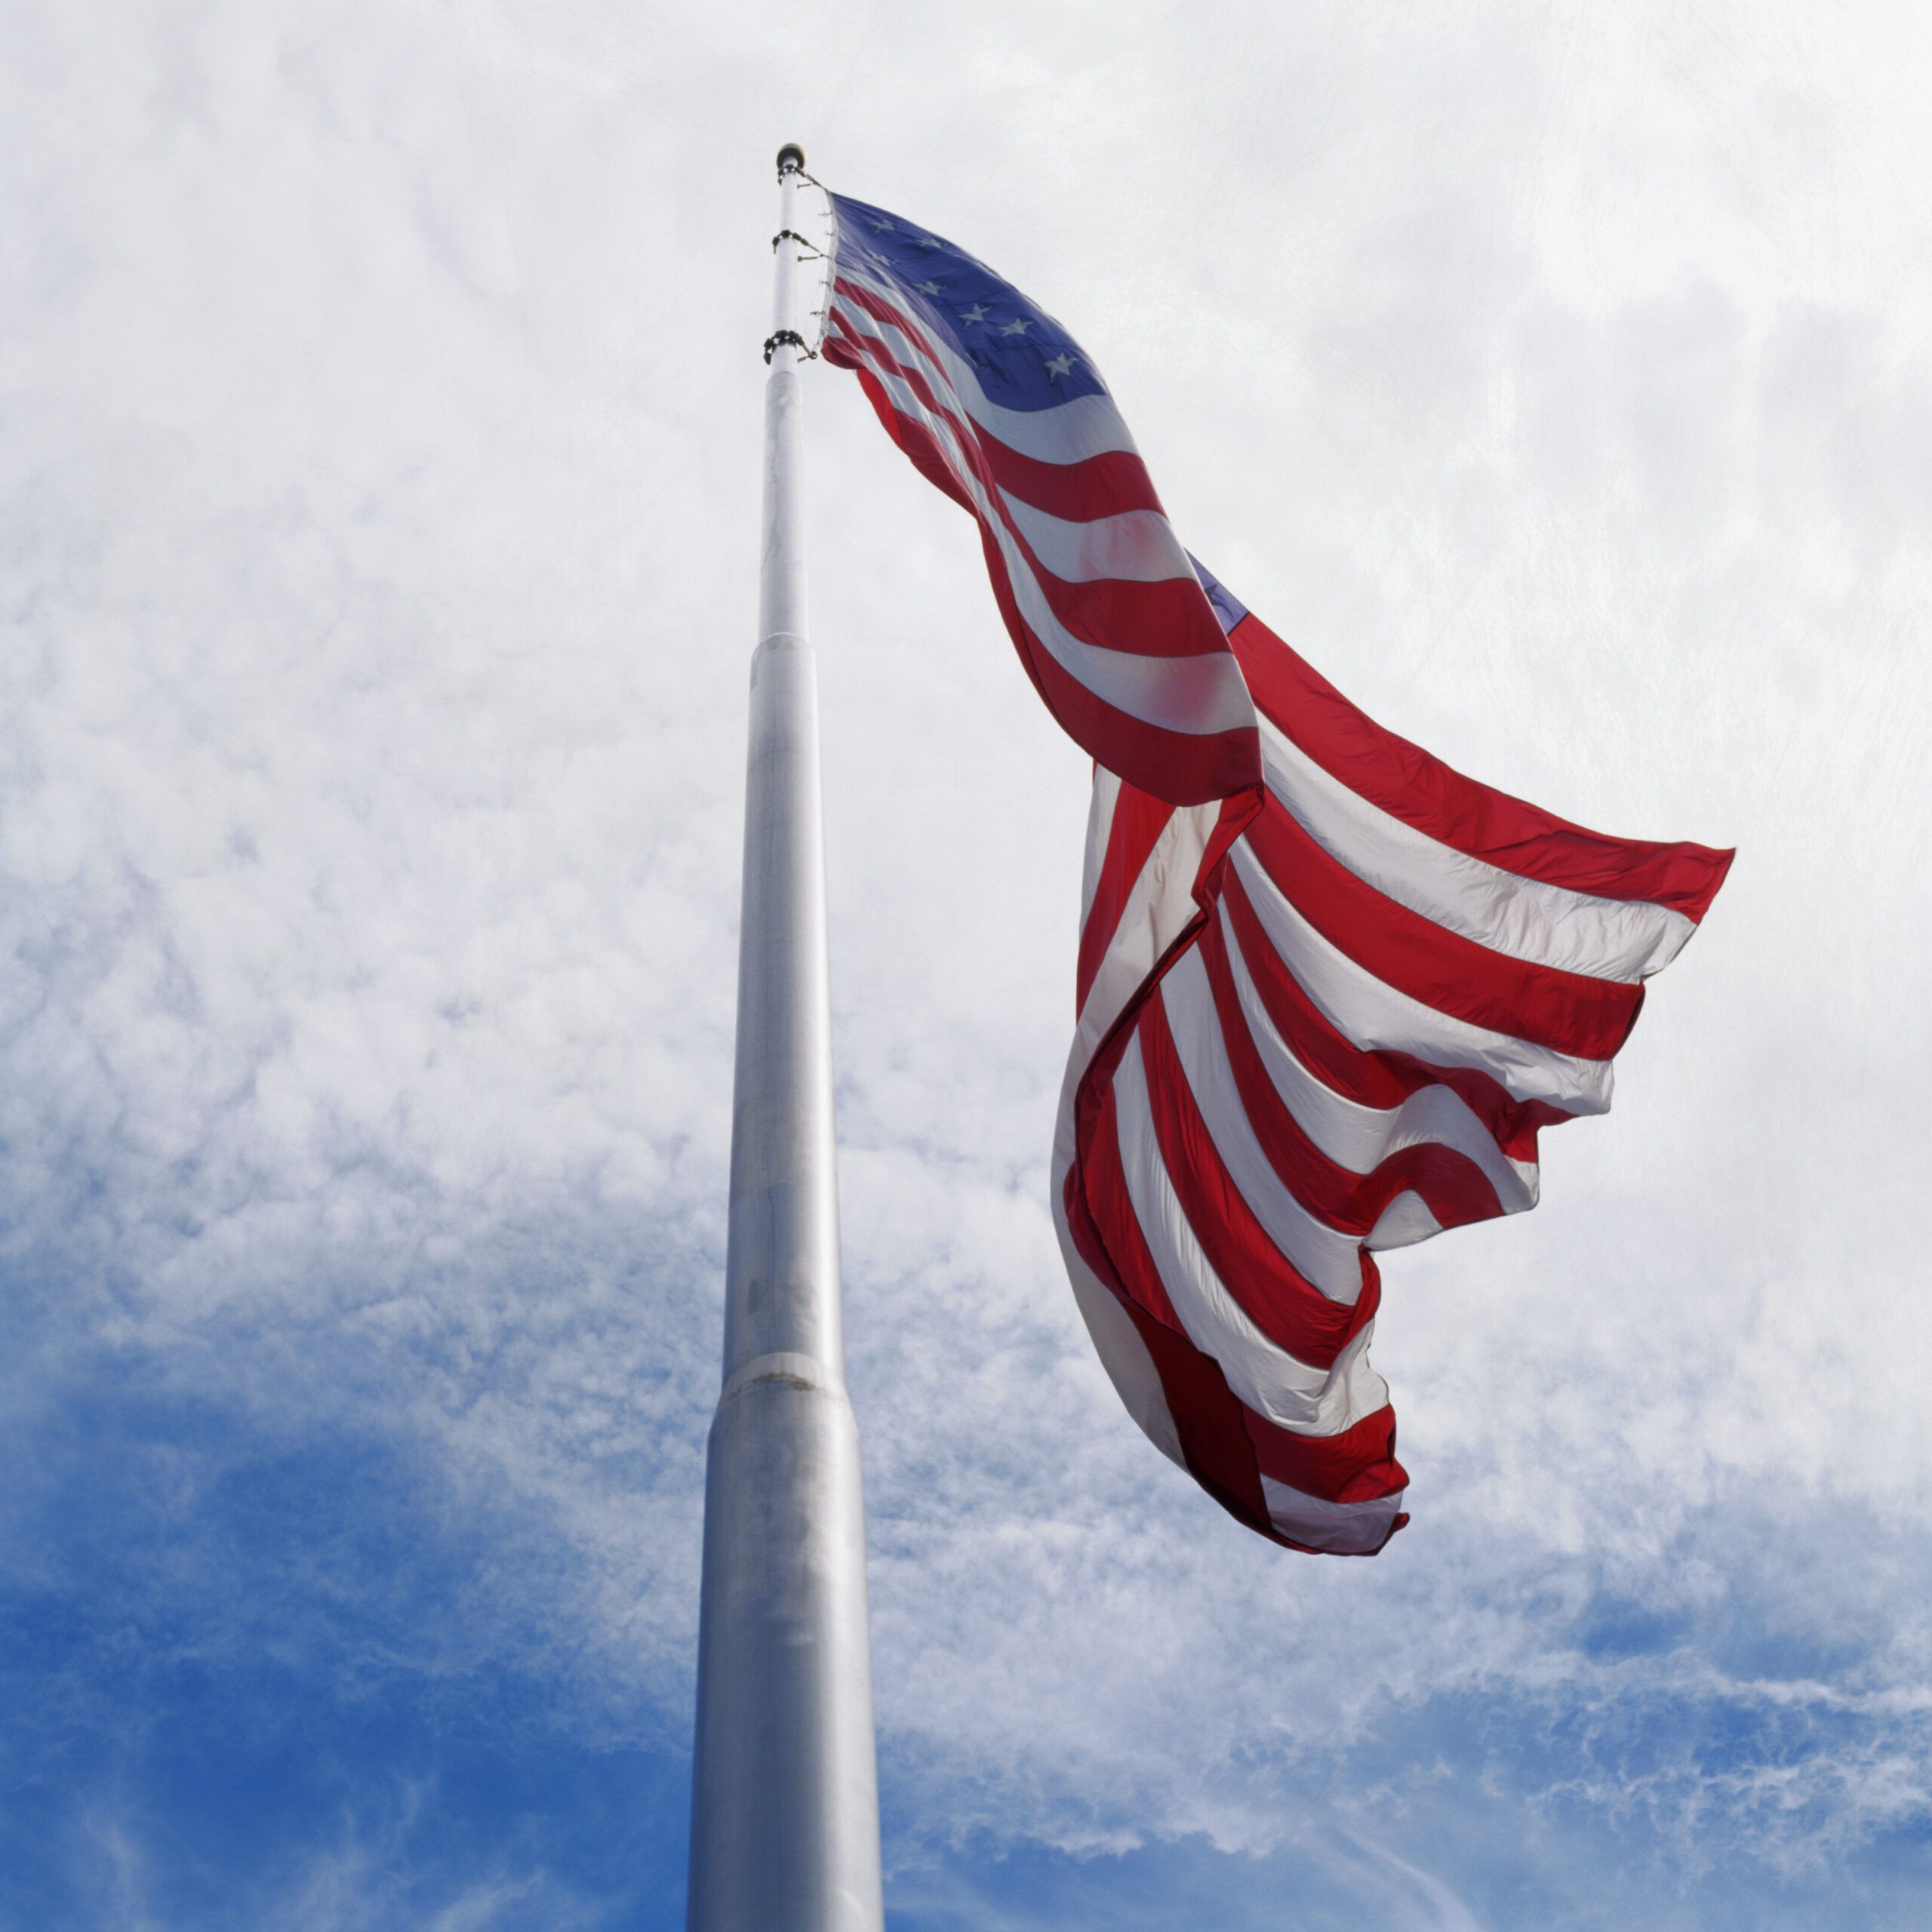 American flag flies on Memorial Day at half staff